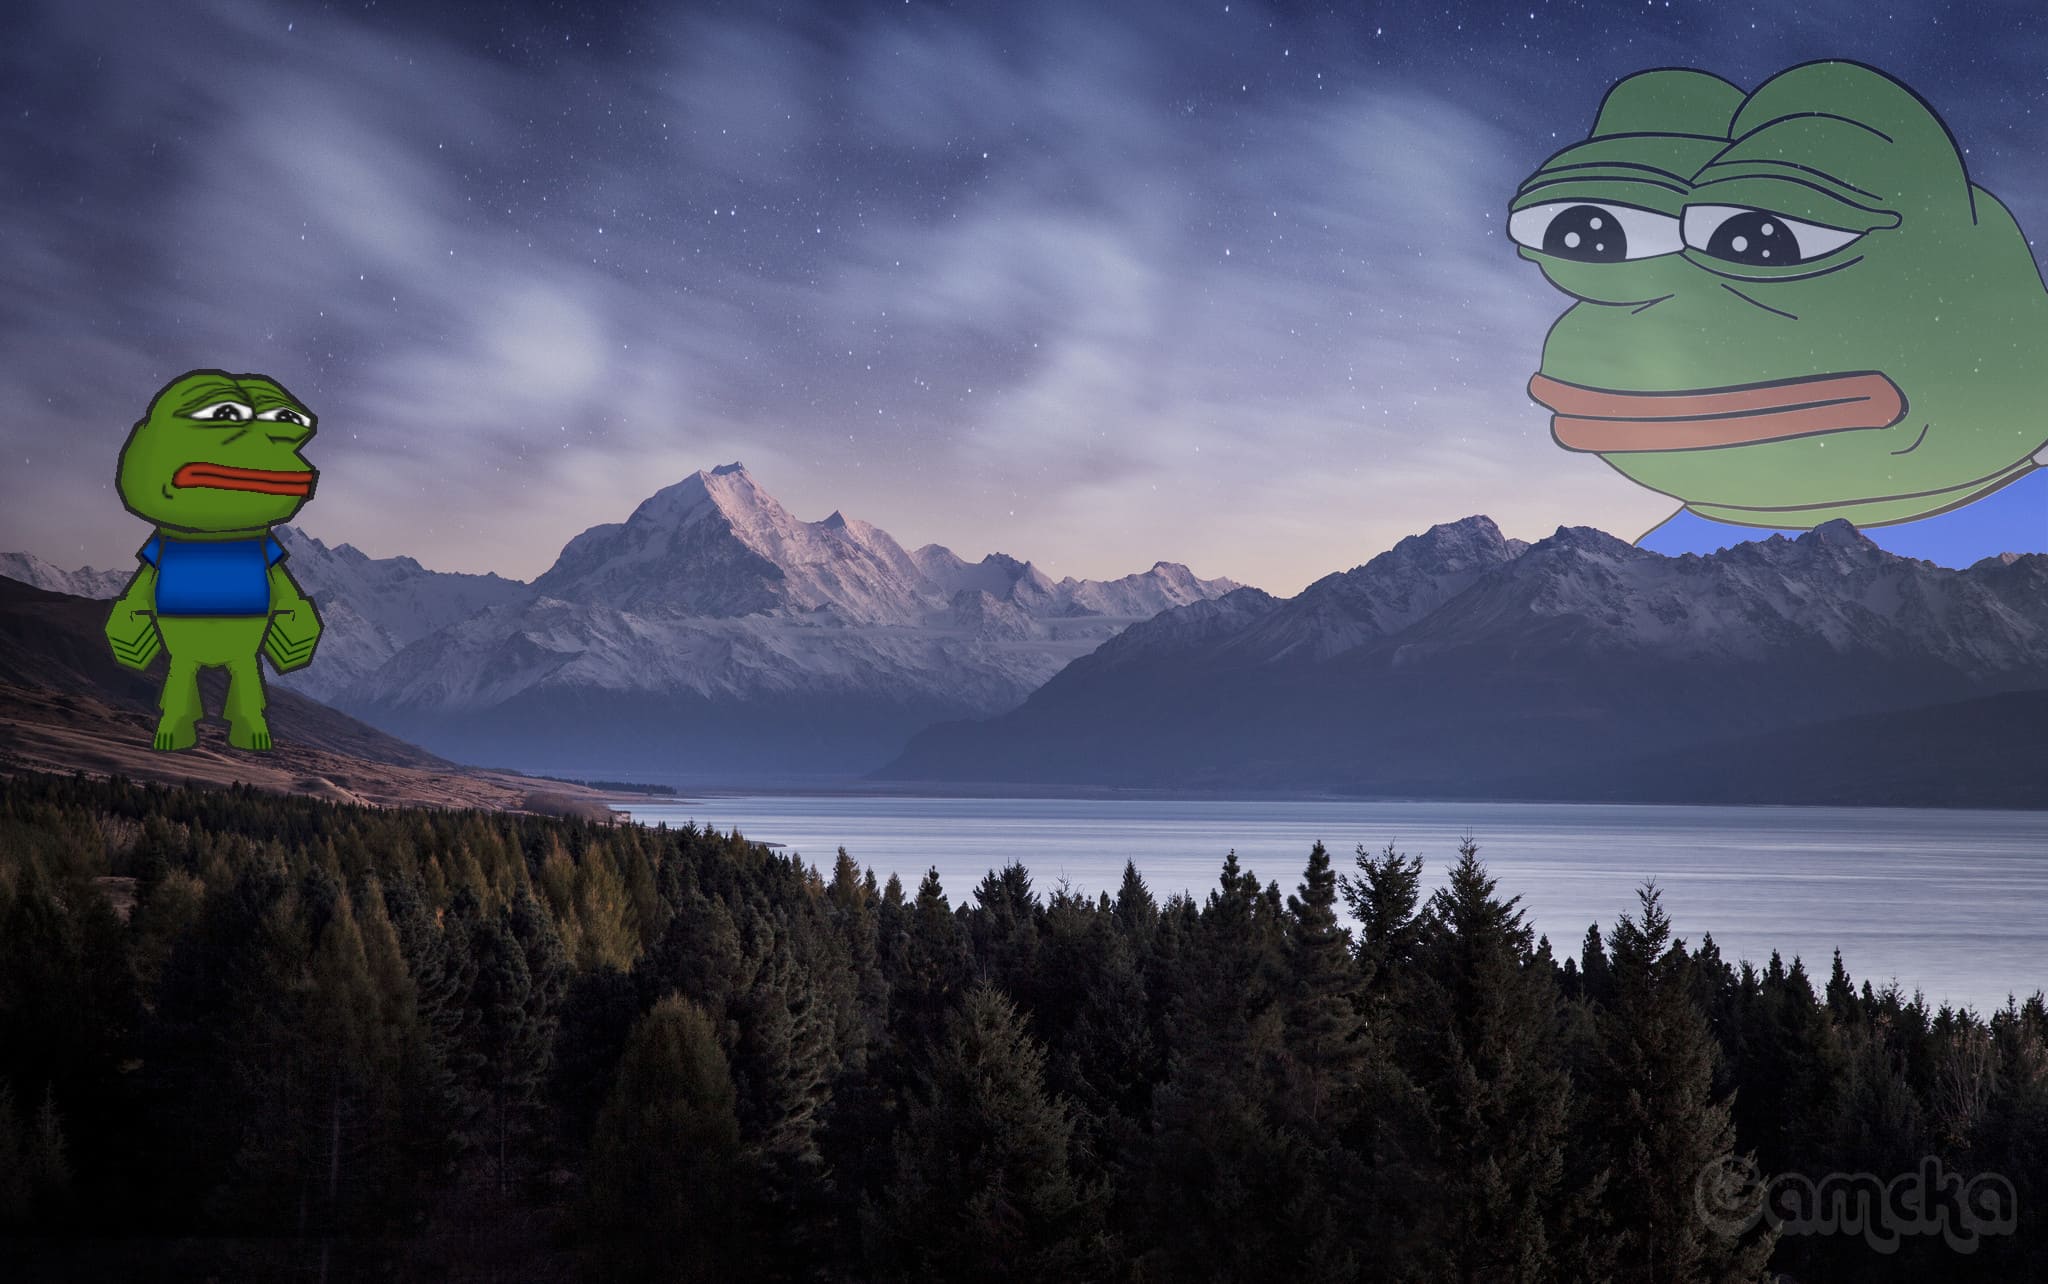 【Unknown】悲傷蛙 Sad Frog ( 佩佩蛙 Pepe the Frog ) - Gamcka.jpg